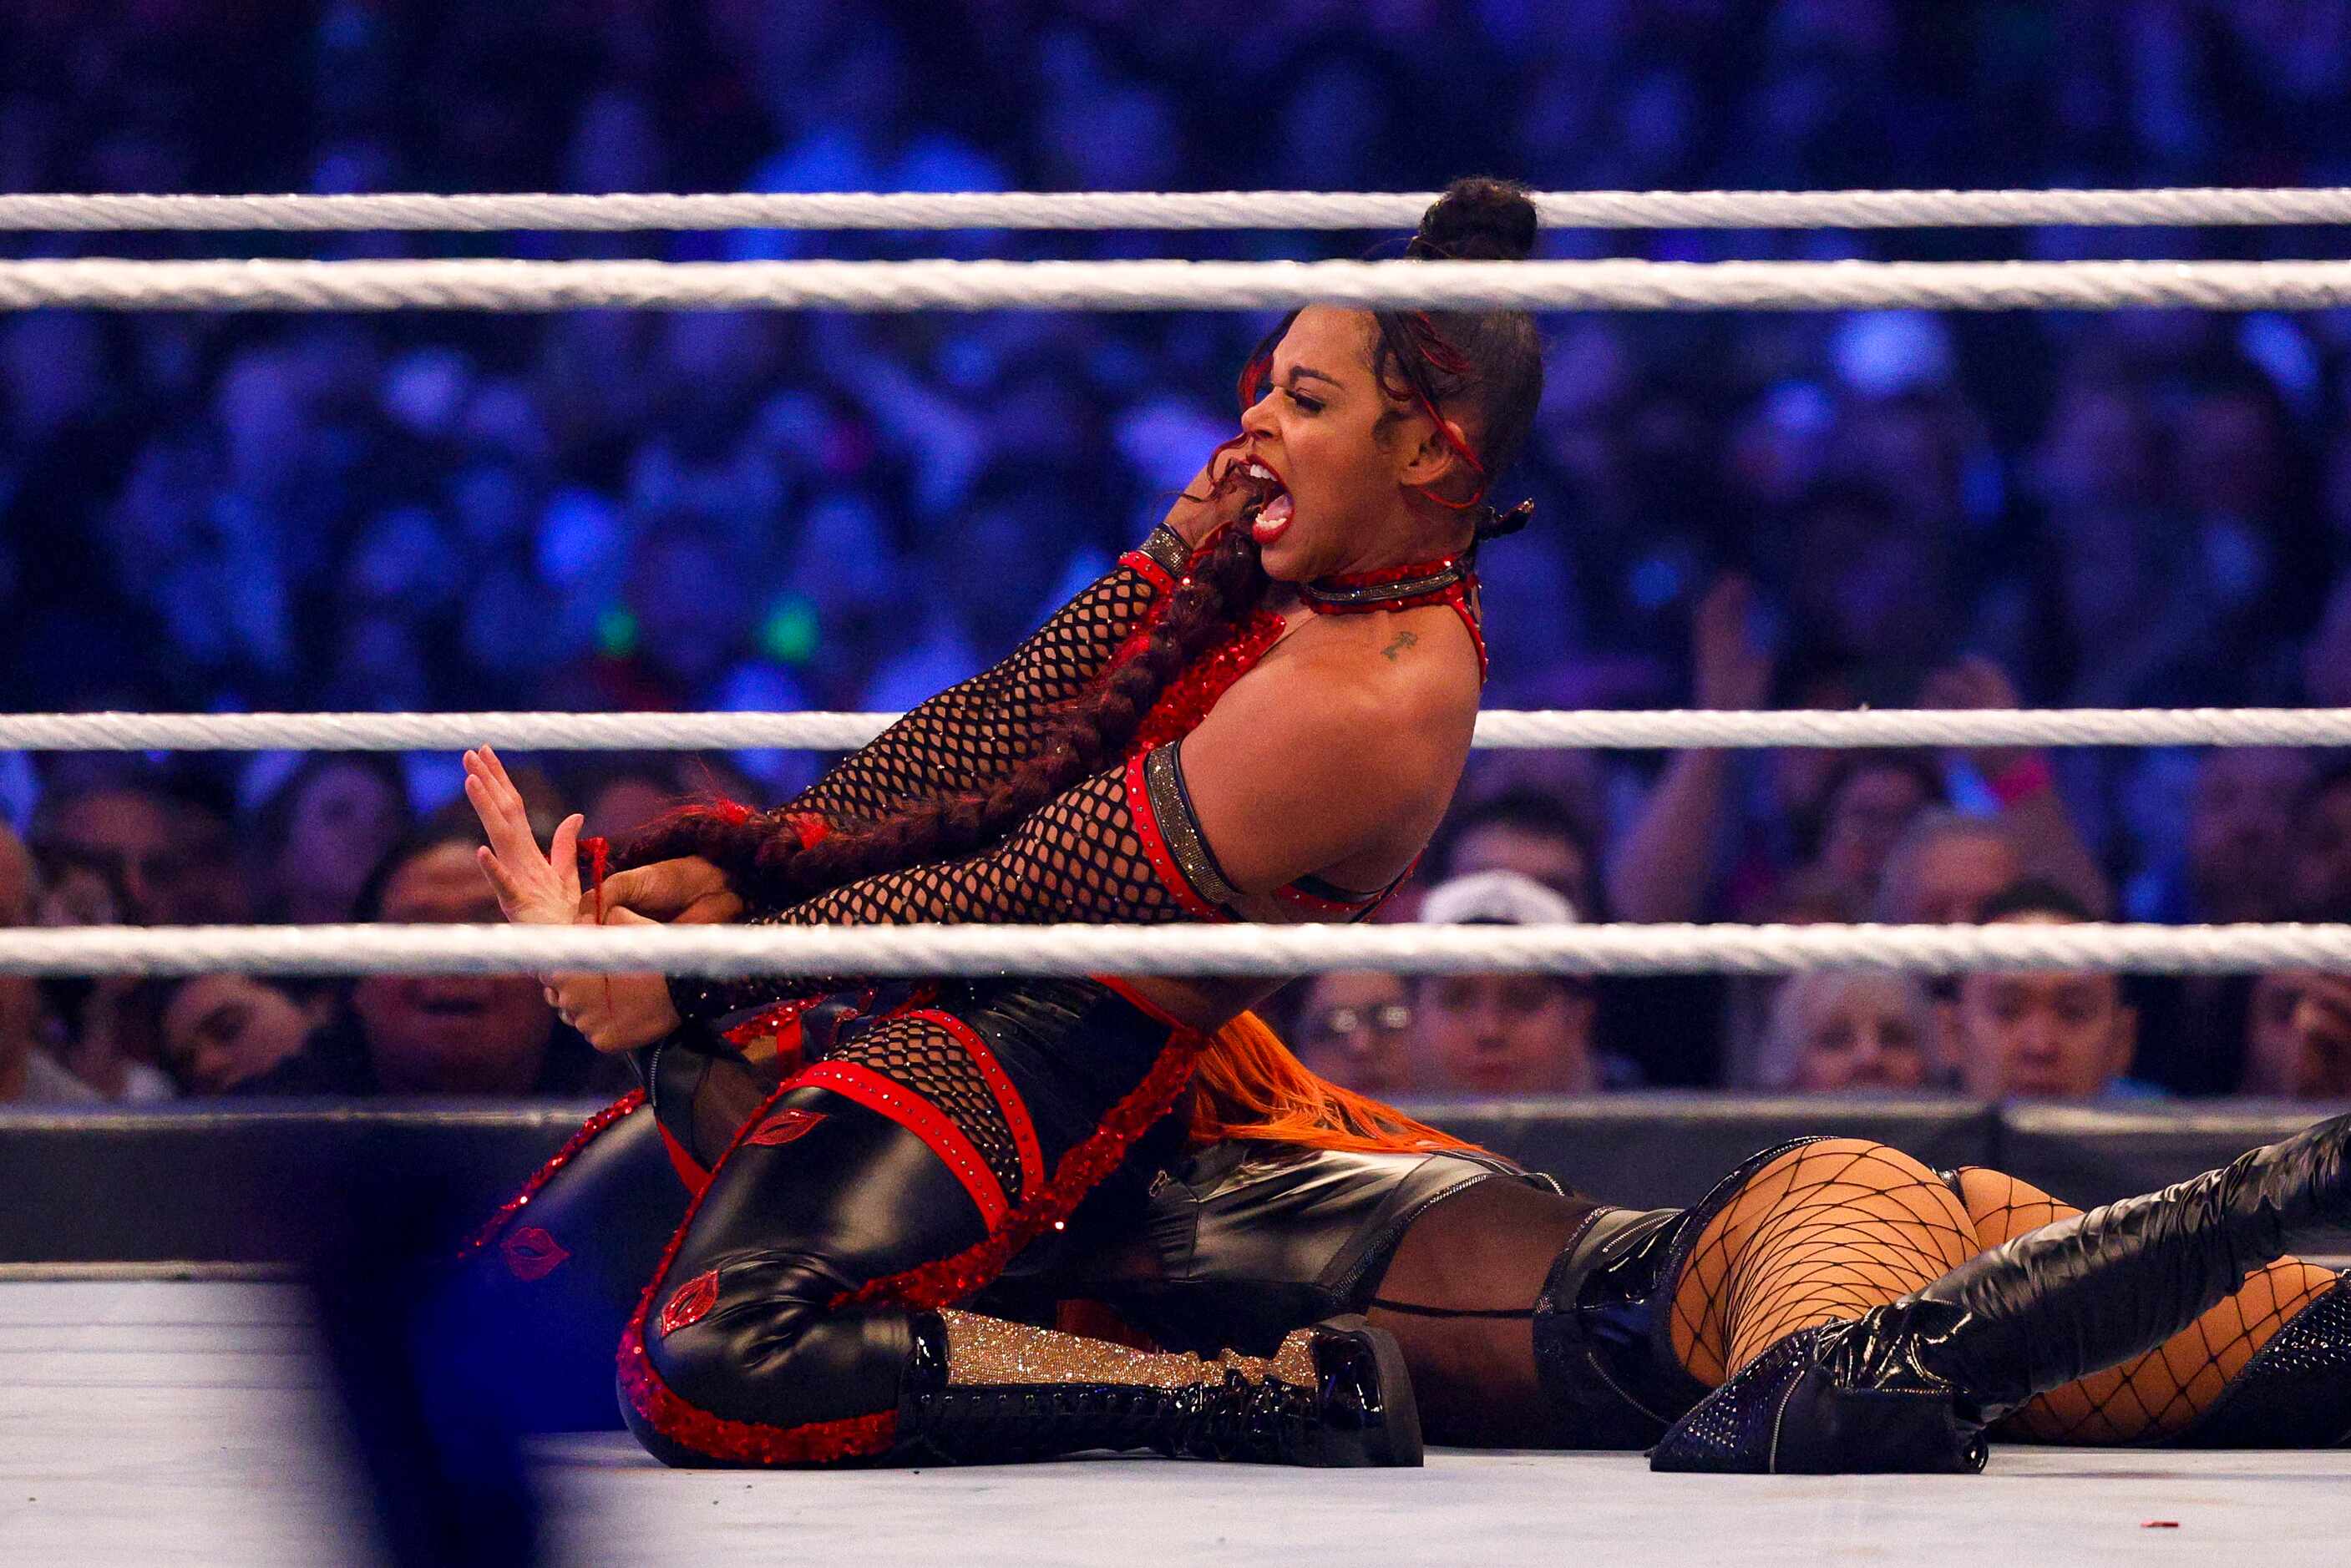 Bianca Belair pins Becky Lynch during the Raw Women's Championship match at WrestleMania 38...